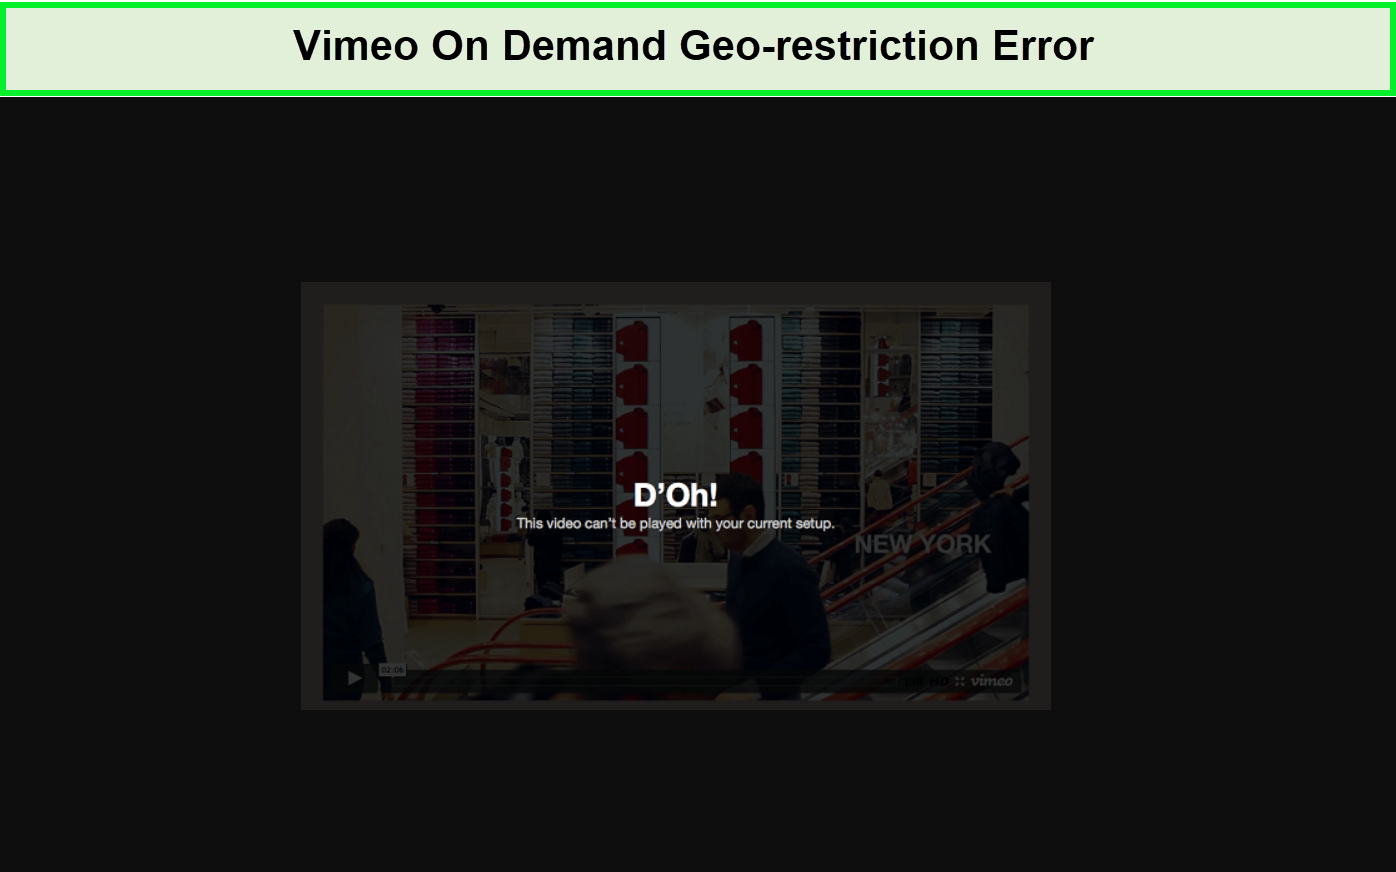 Does Vimeo on Demand Work With ExpressVPN